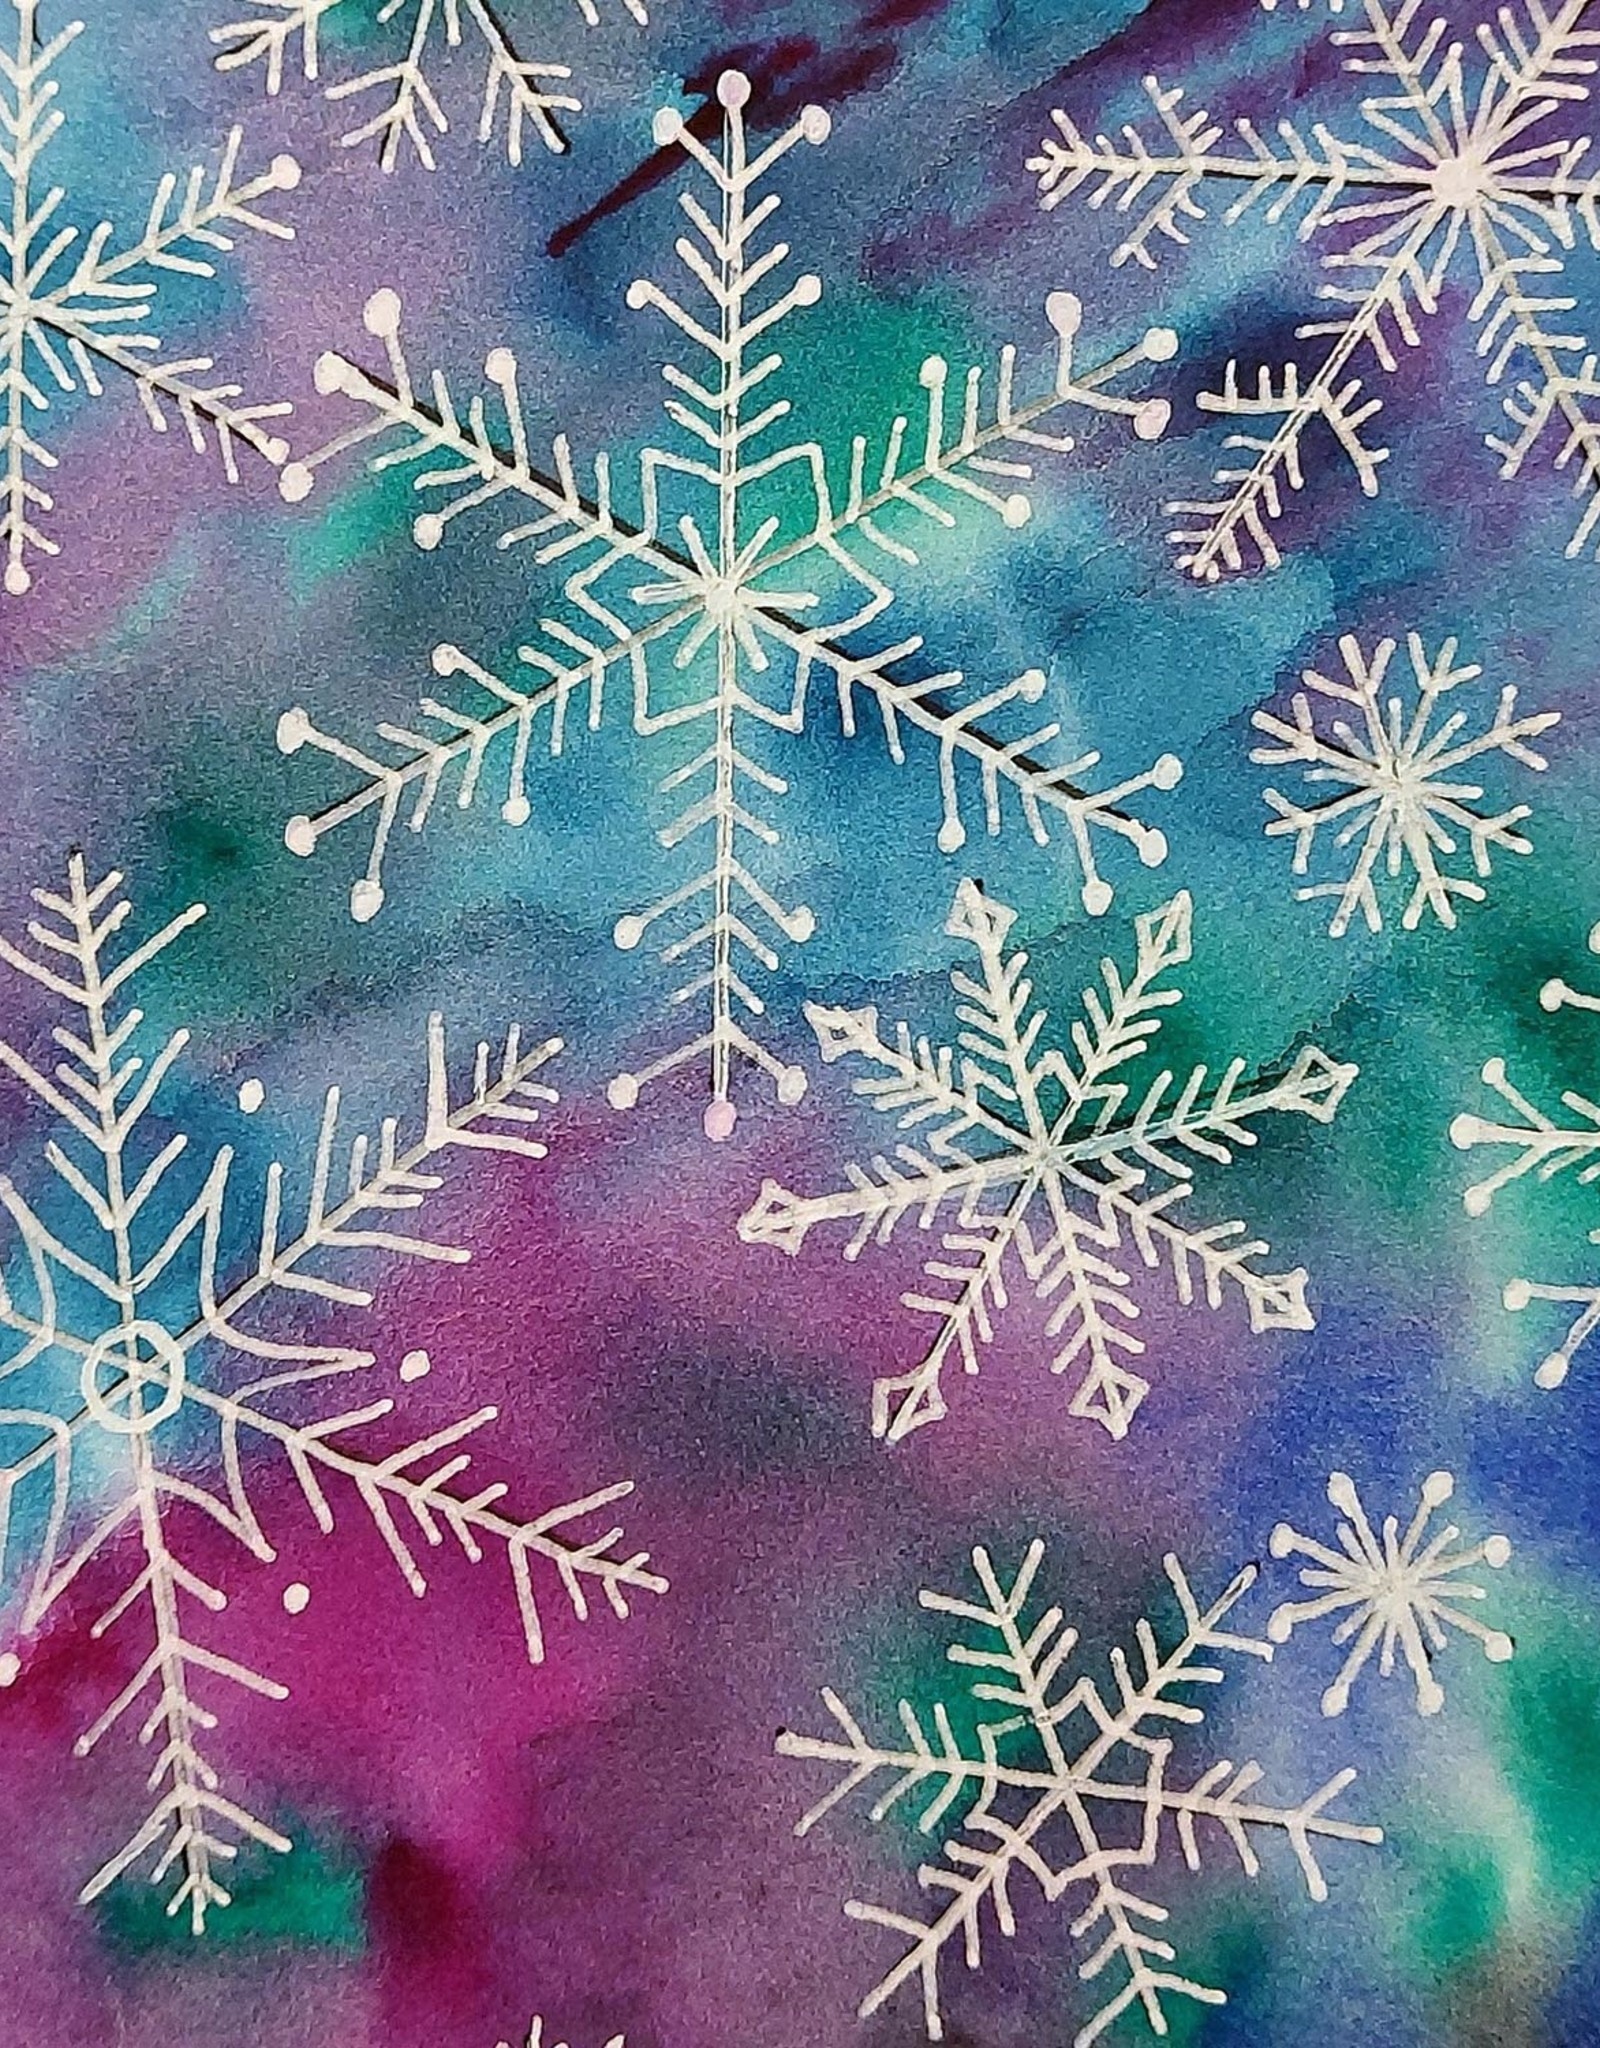 Tamara S Watercolour Art Class Snowflakes Wed Jan 26 1:00 pm to 3:00 pm